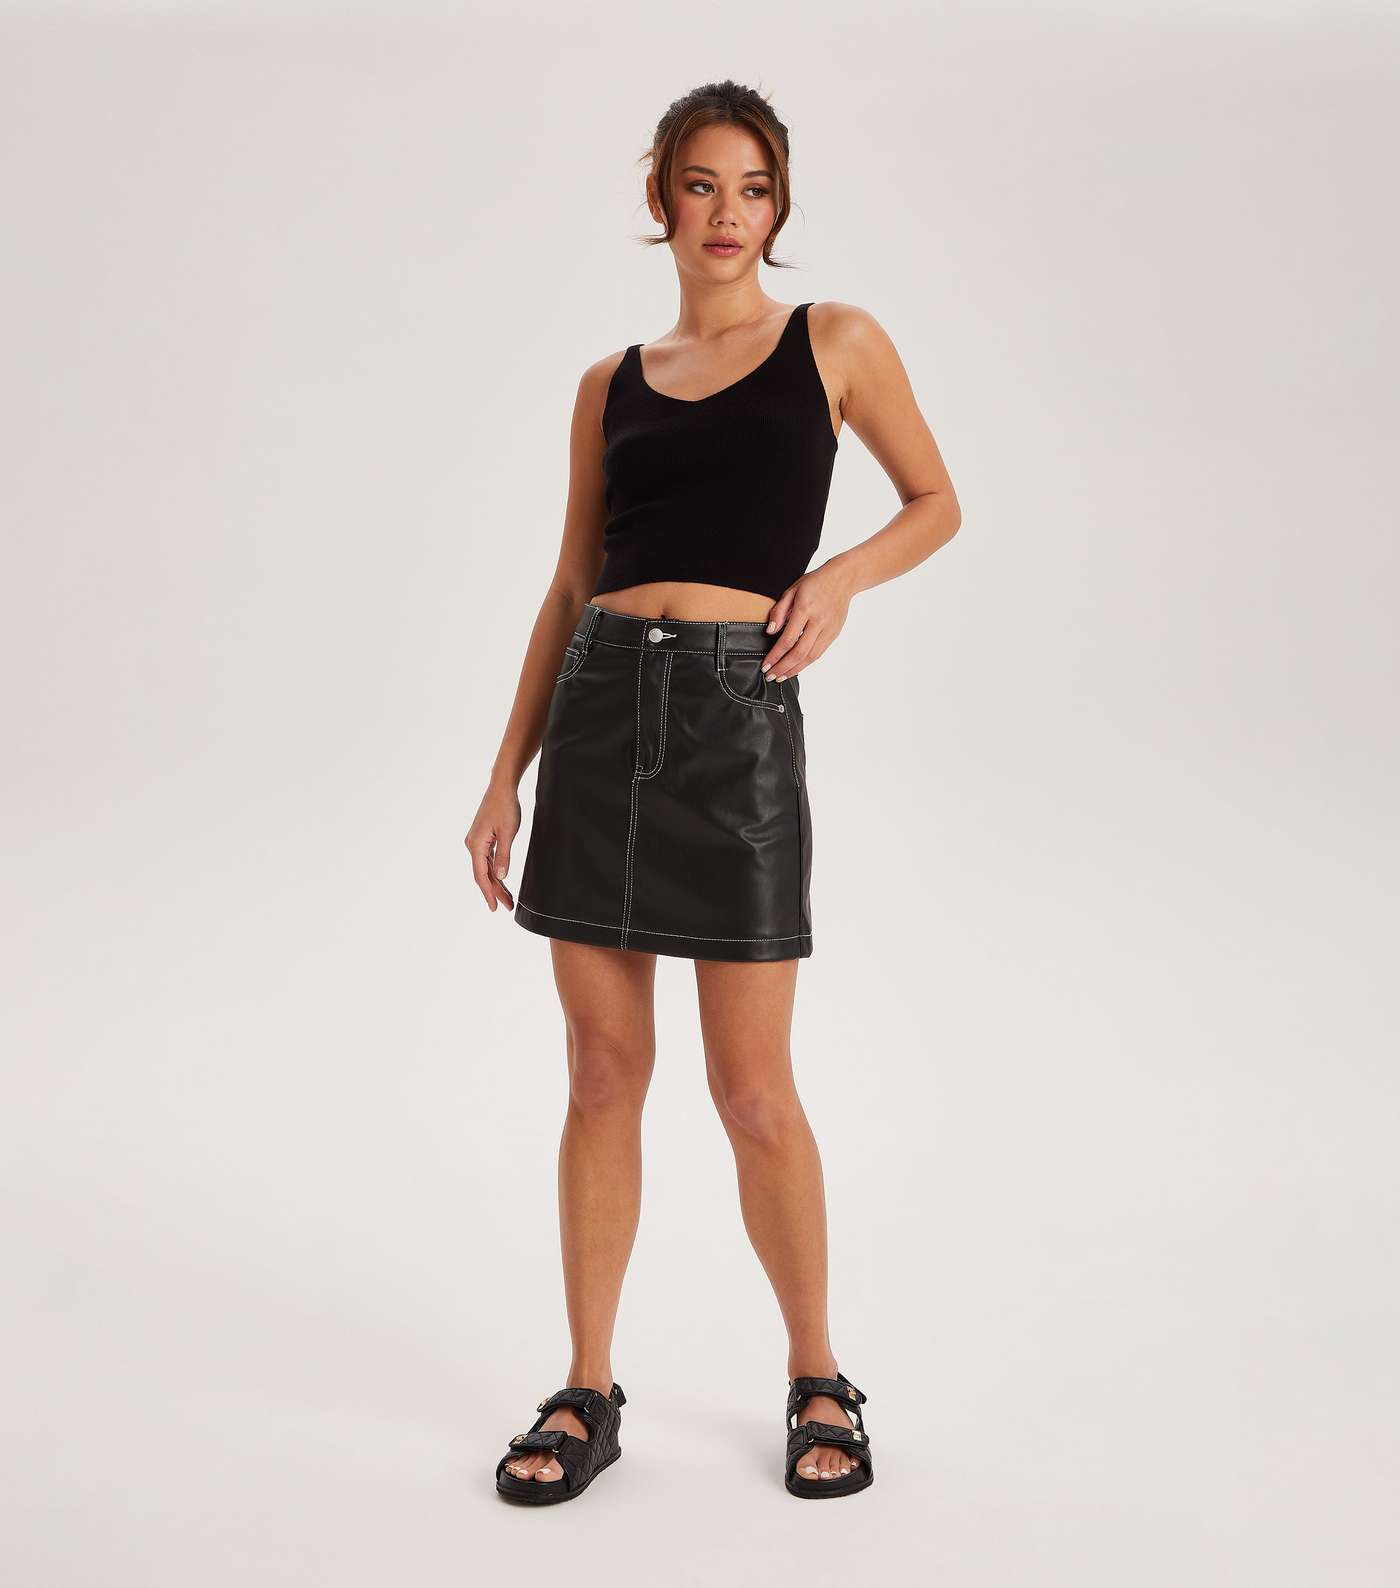 Urban Bliss Black Leather-Look Contrast Stitch Mini Skirt Image 2